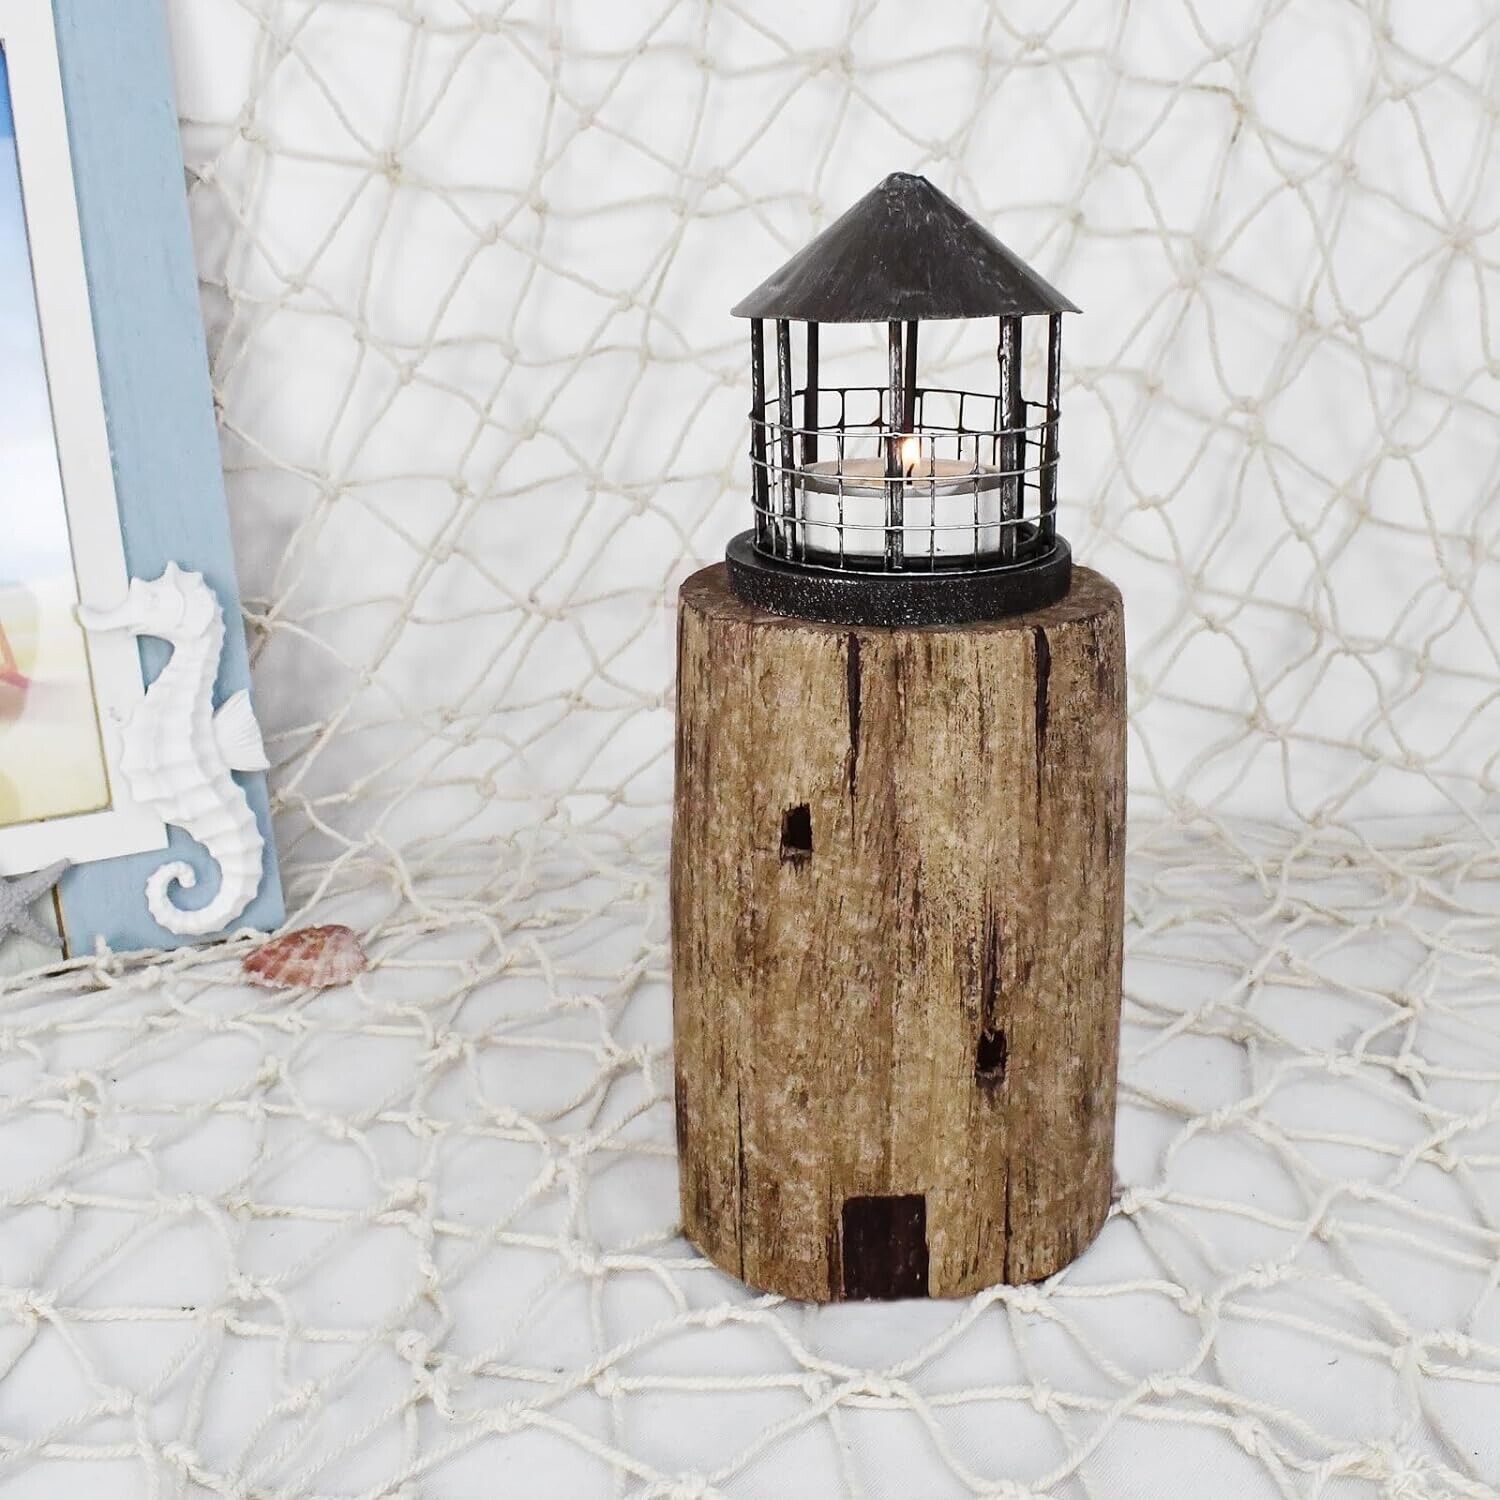 Wooden Lighthouse Candle Holder Decorative Tea Light Holder Ocean Beach Nautical - $25.23 - $43.00